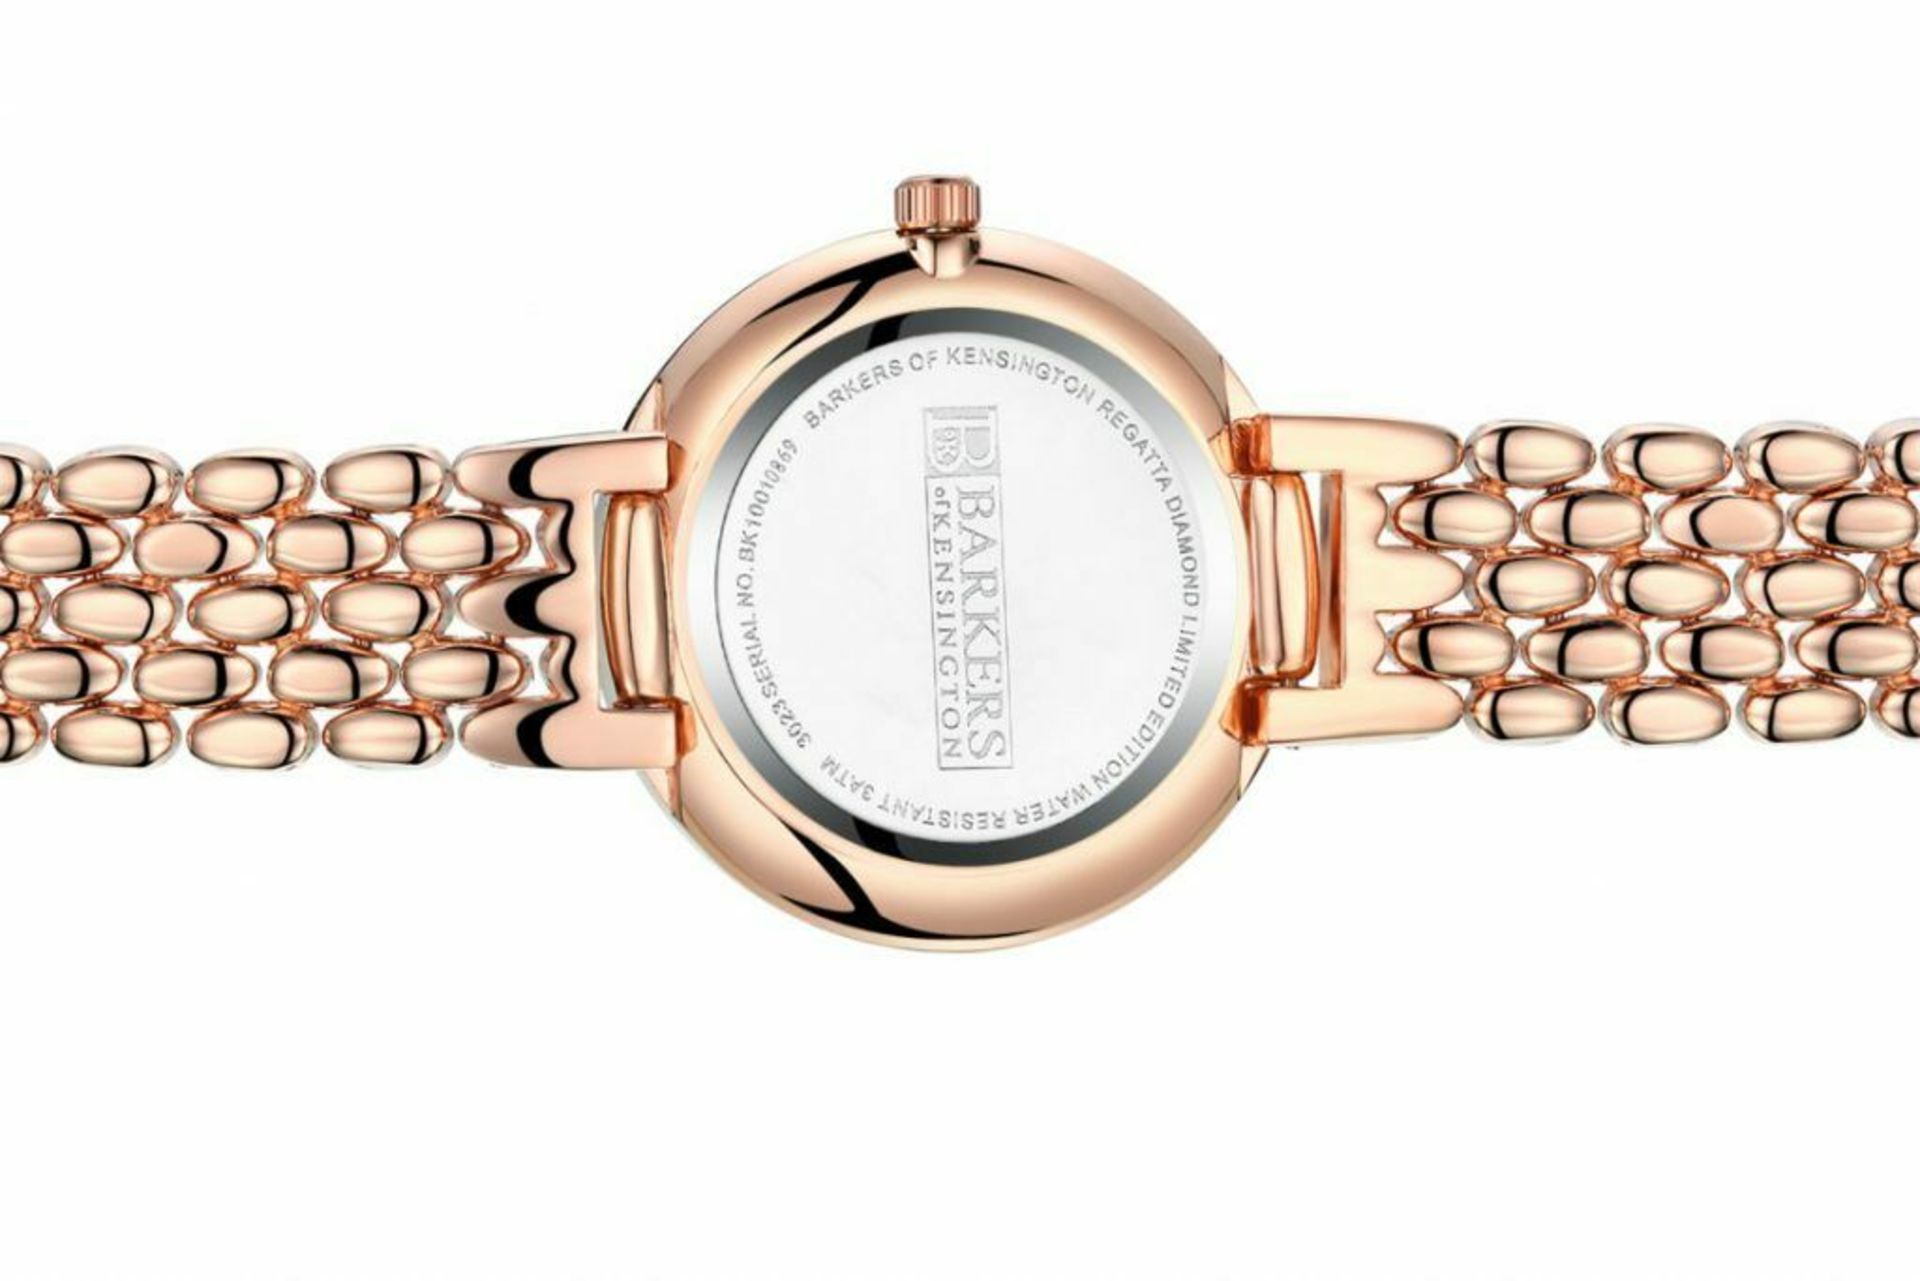 Brand New Barkers of Kensington Ladies Regatta Diamond Set Watch - Image 6 of 6